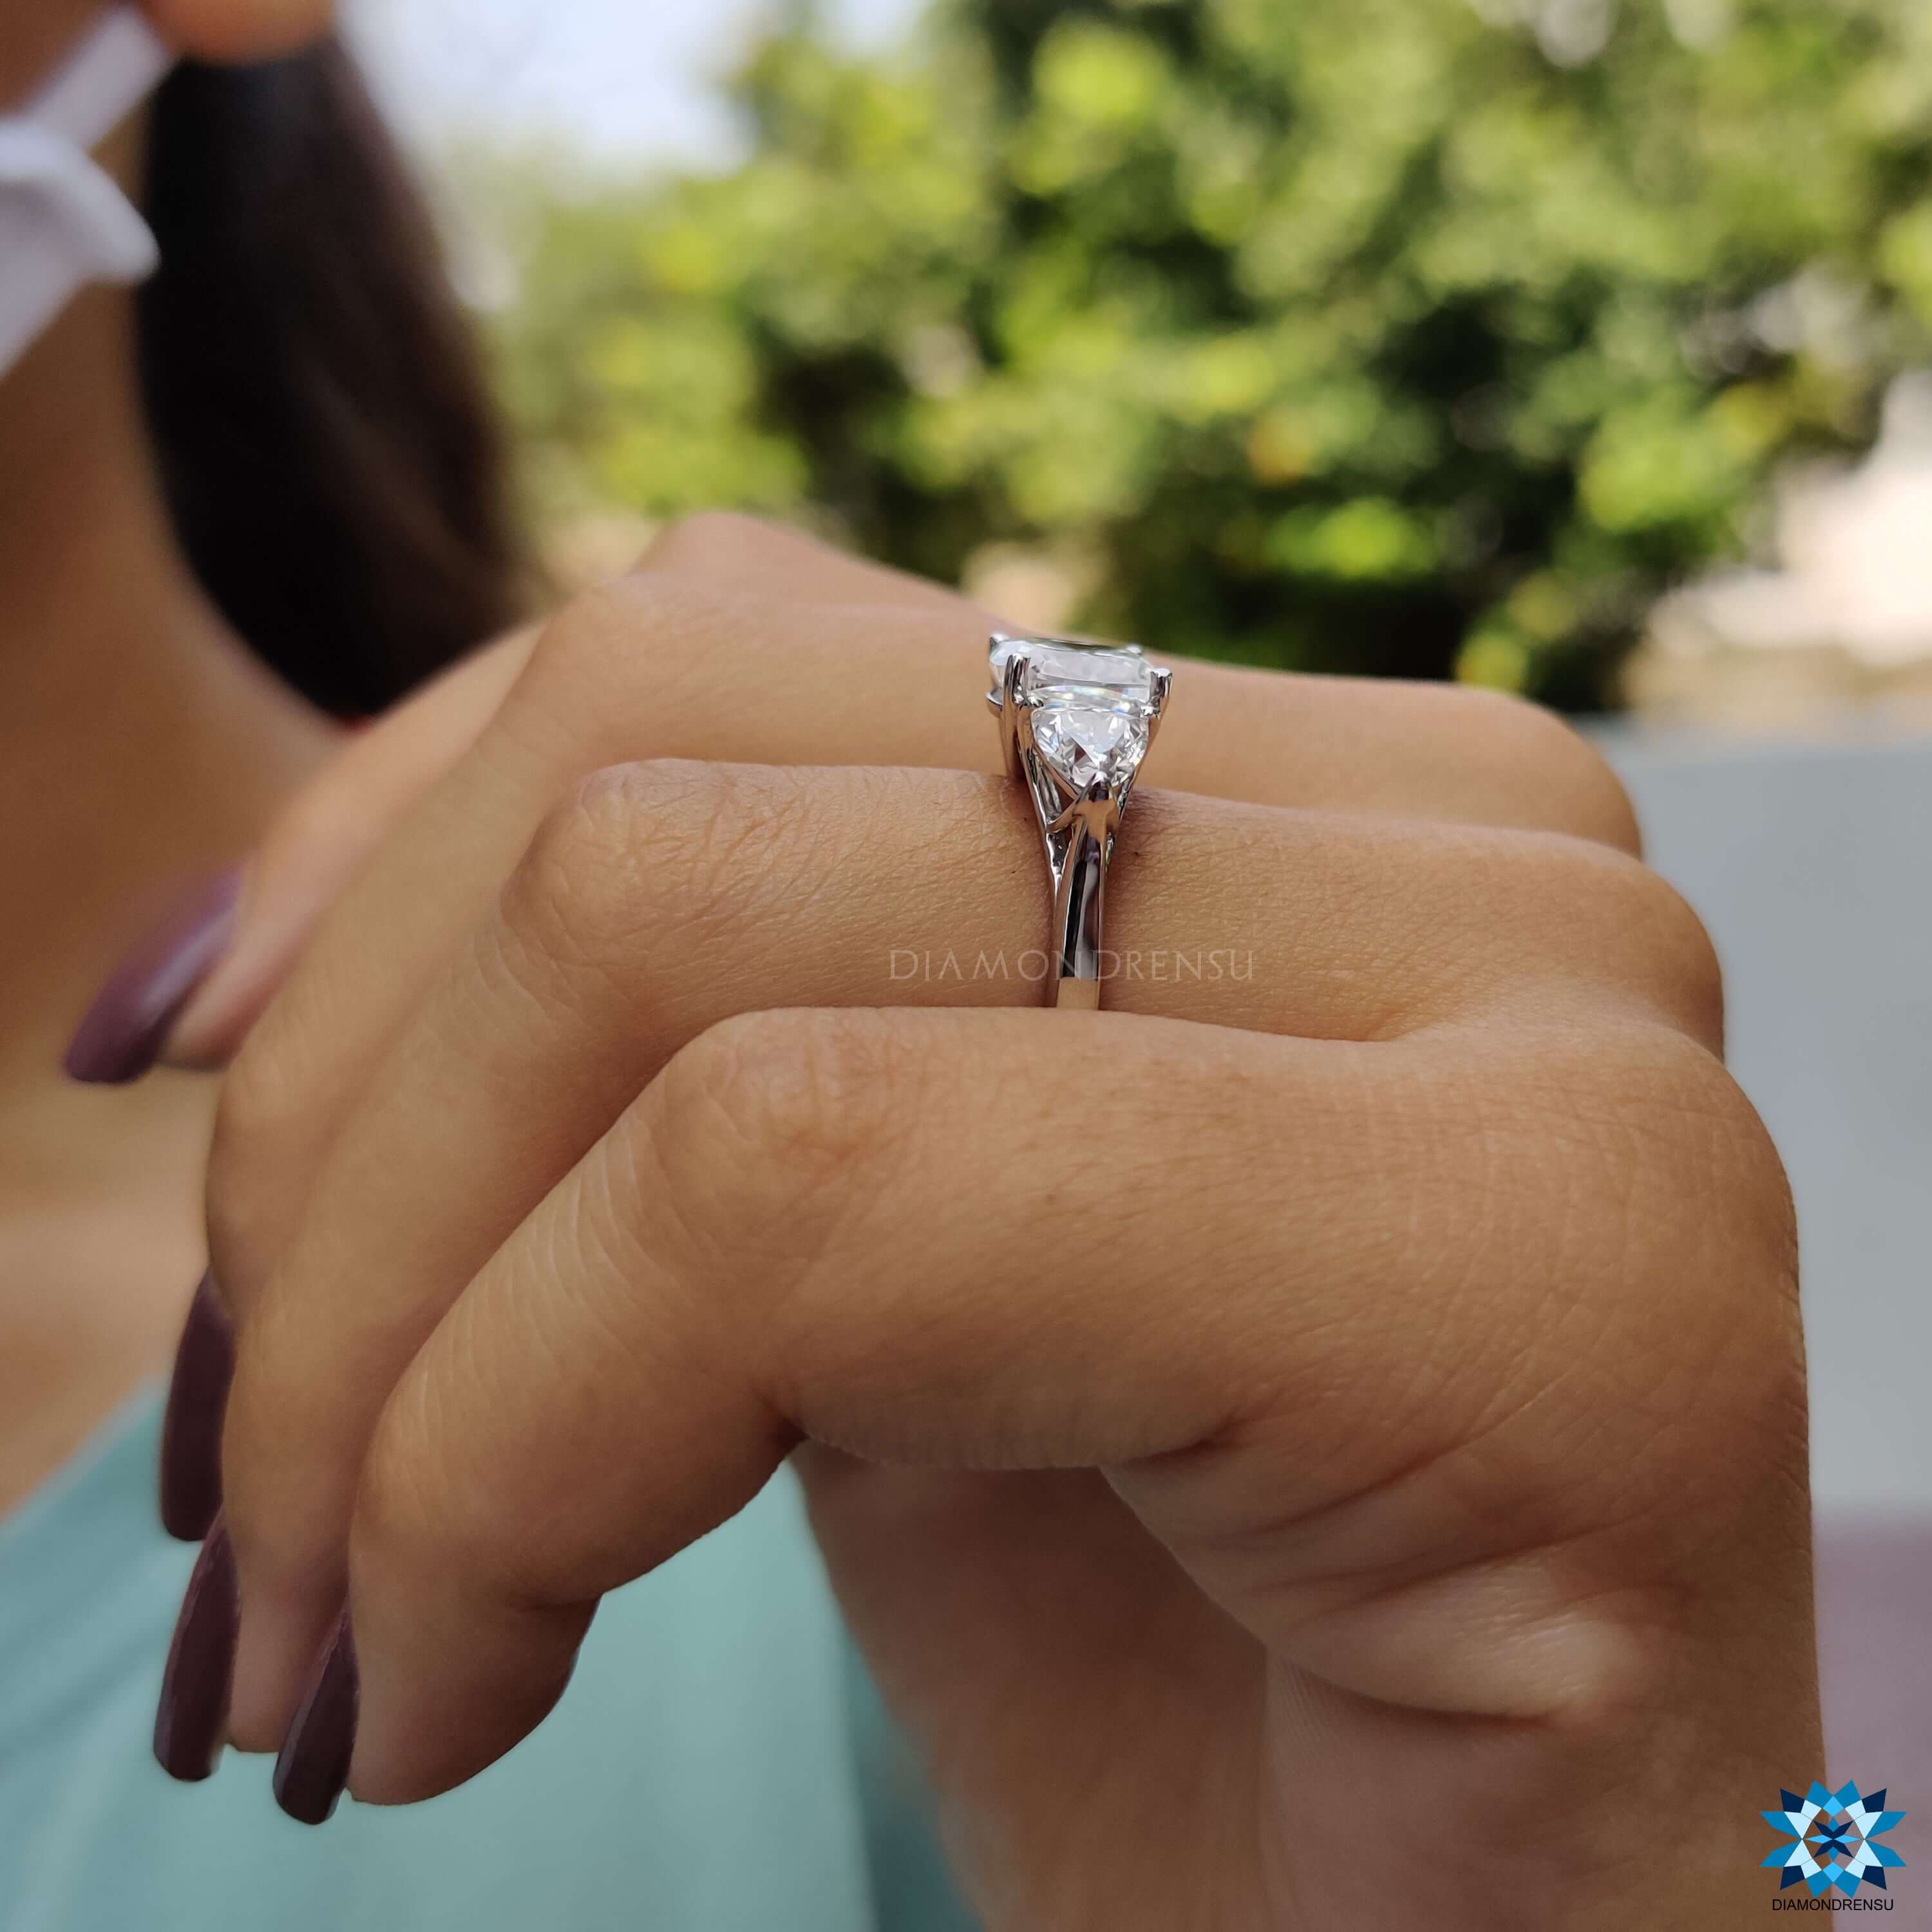 trellis setting engagement ring - diamondrensu